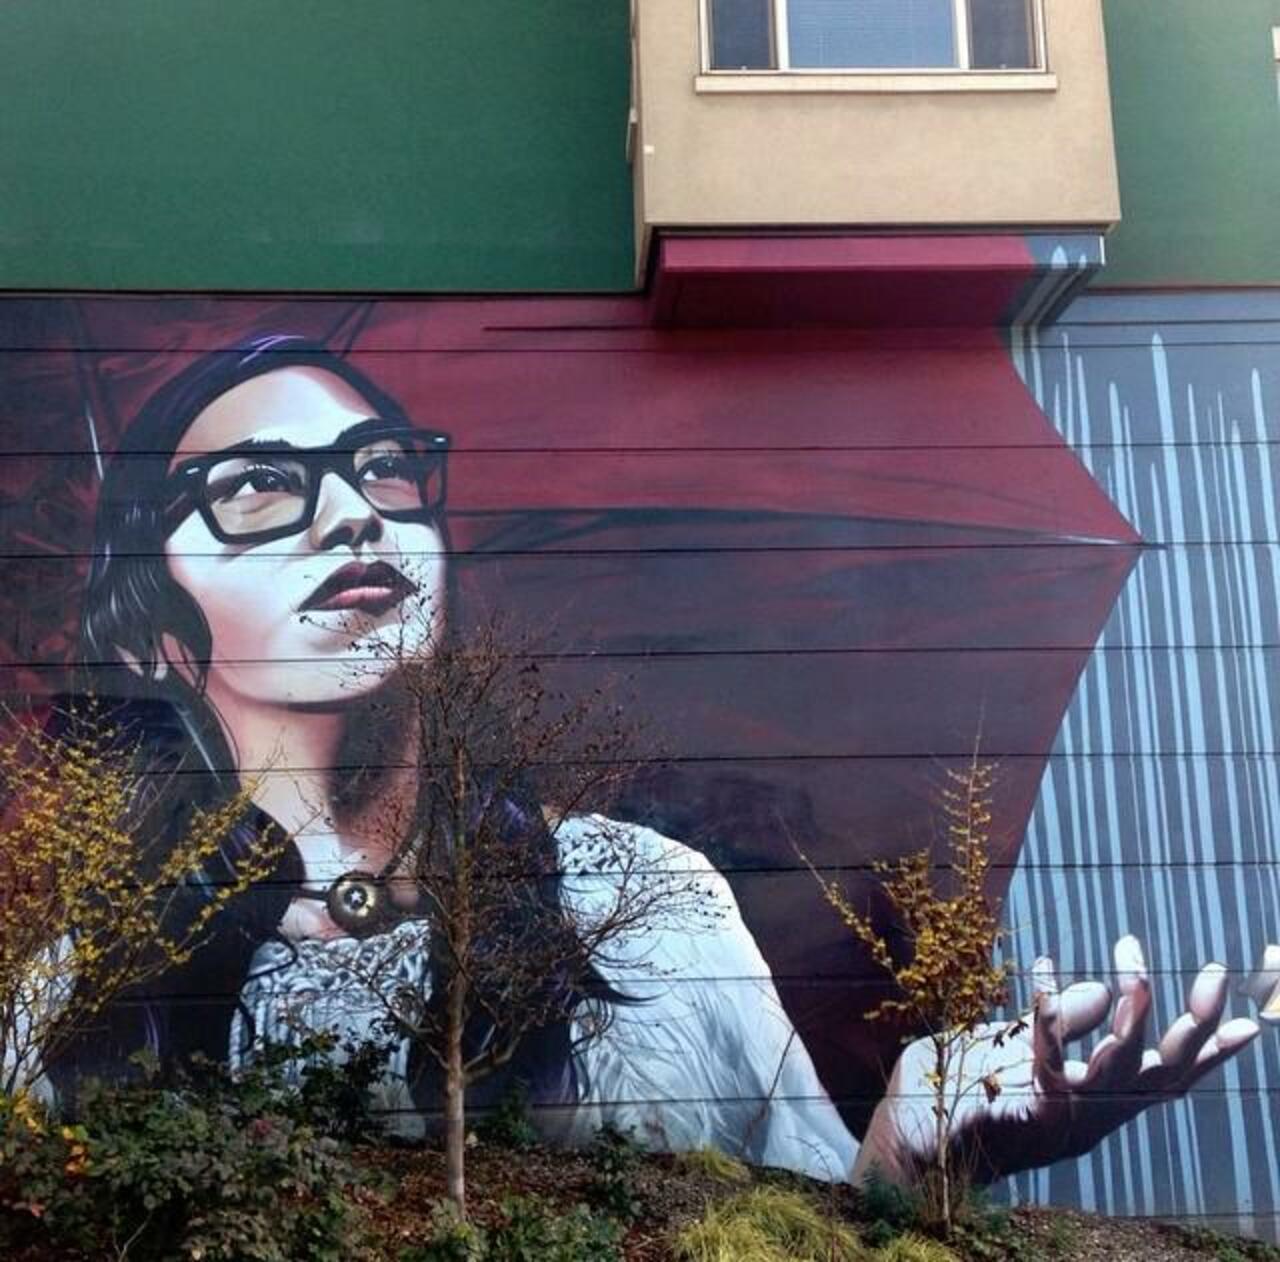 RT "@GoogleStreetArt: Artist Eras MFK Street Art piece in Capitol Hill, Seattle

#art #mural #graffiti #streetart http://t.co/RFEIo4G8mG"